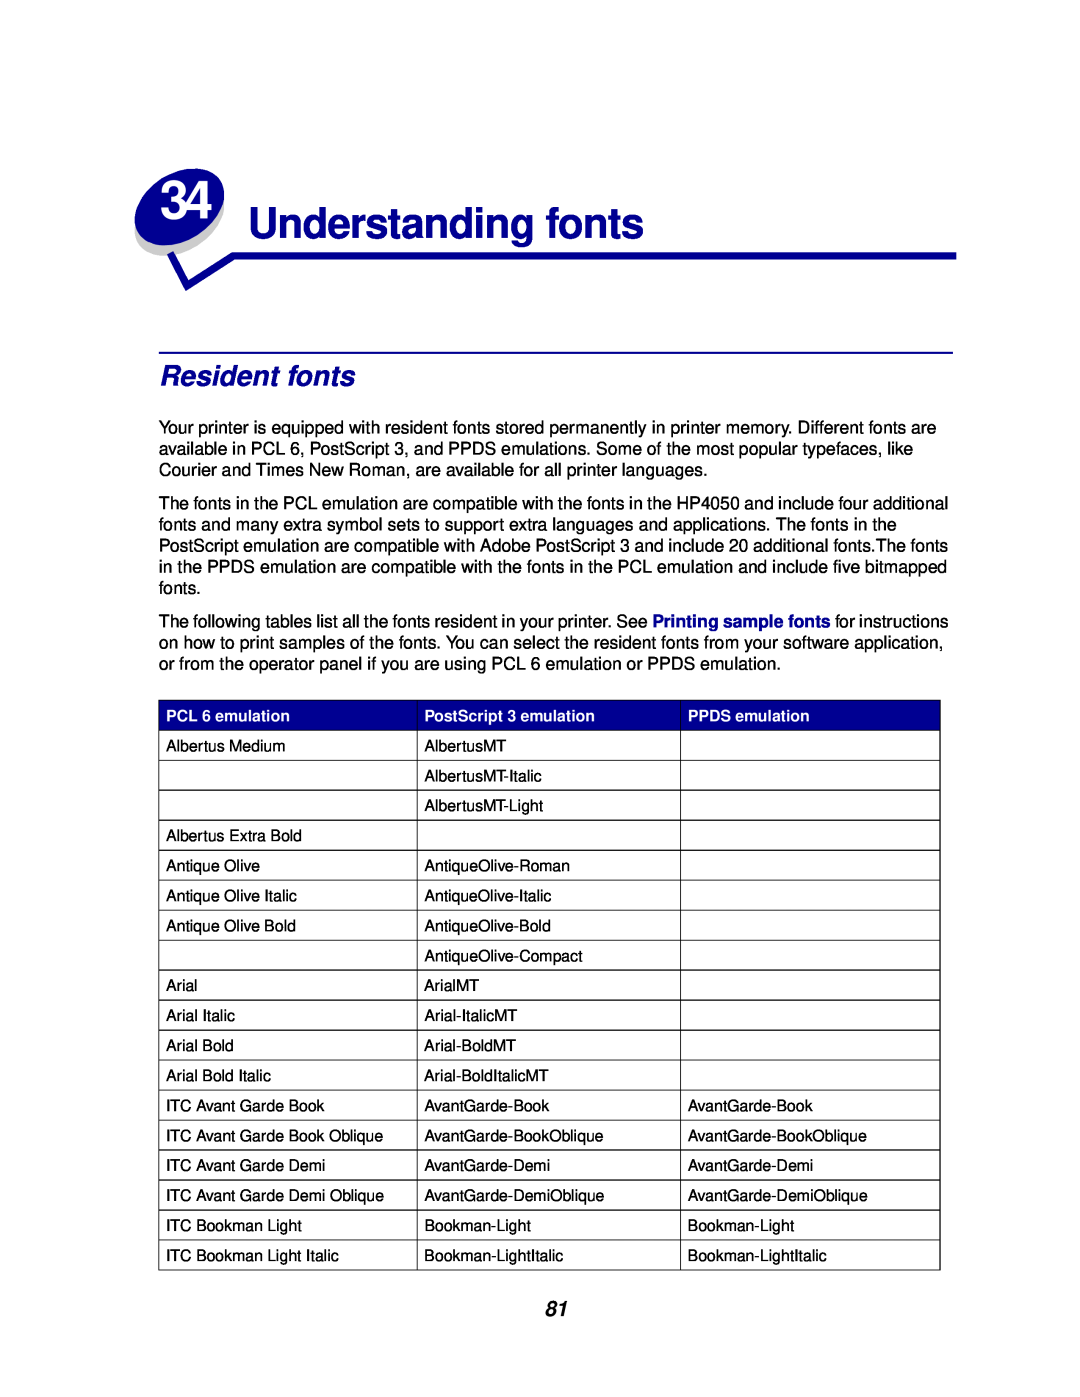 Lexmark 812 manual Understanding fonts, Resident fonts 